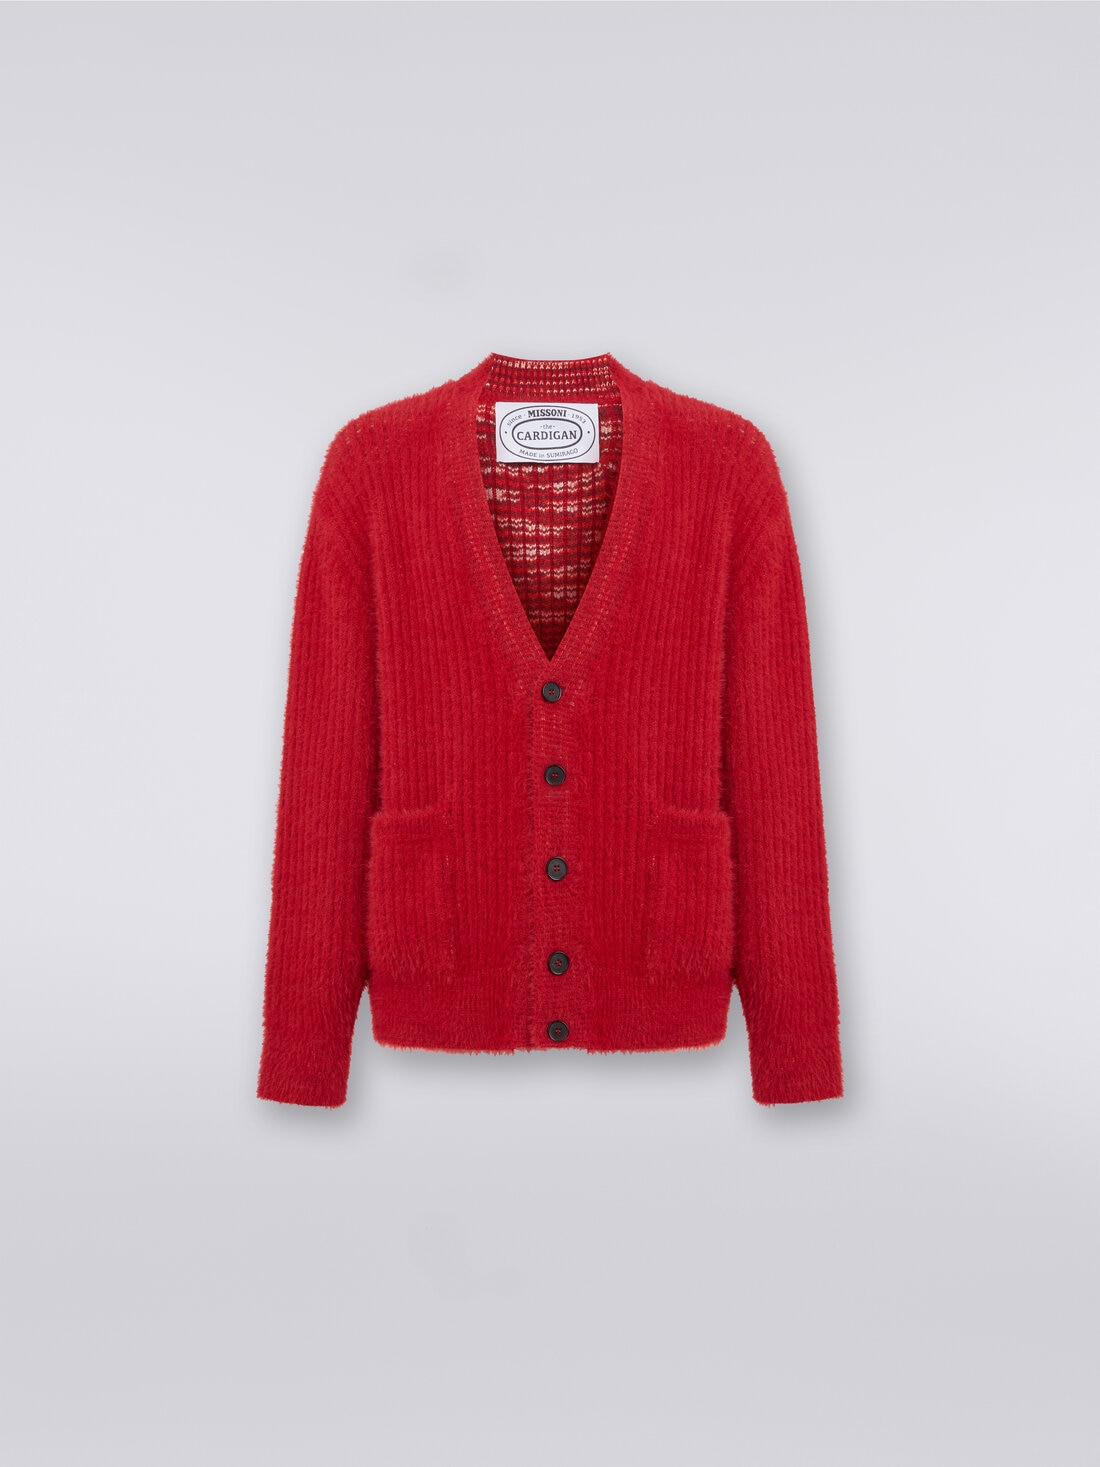 Oversized cardigan in fur-effect wool blend, Red  - US24SM0LBK026I91559 - 0